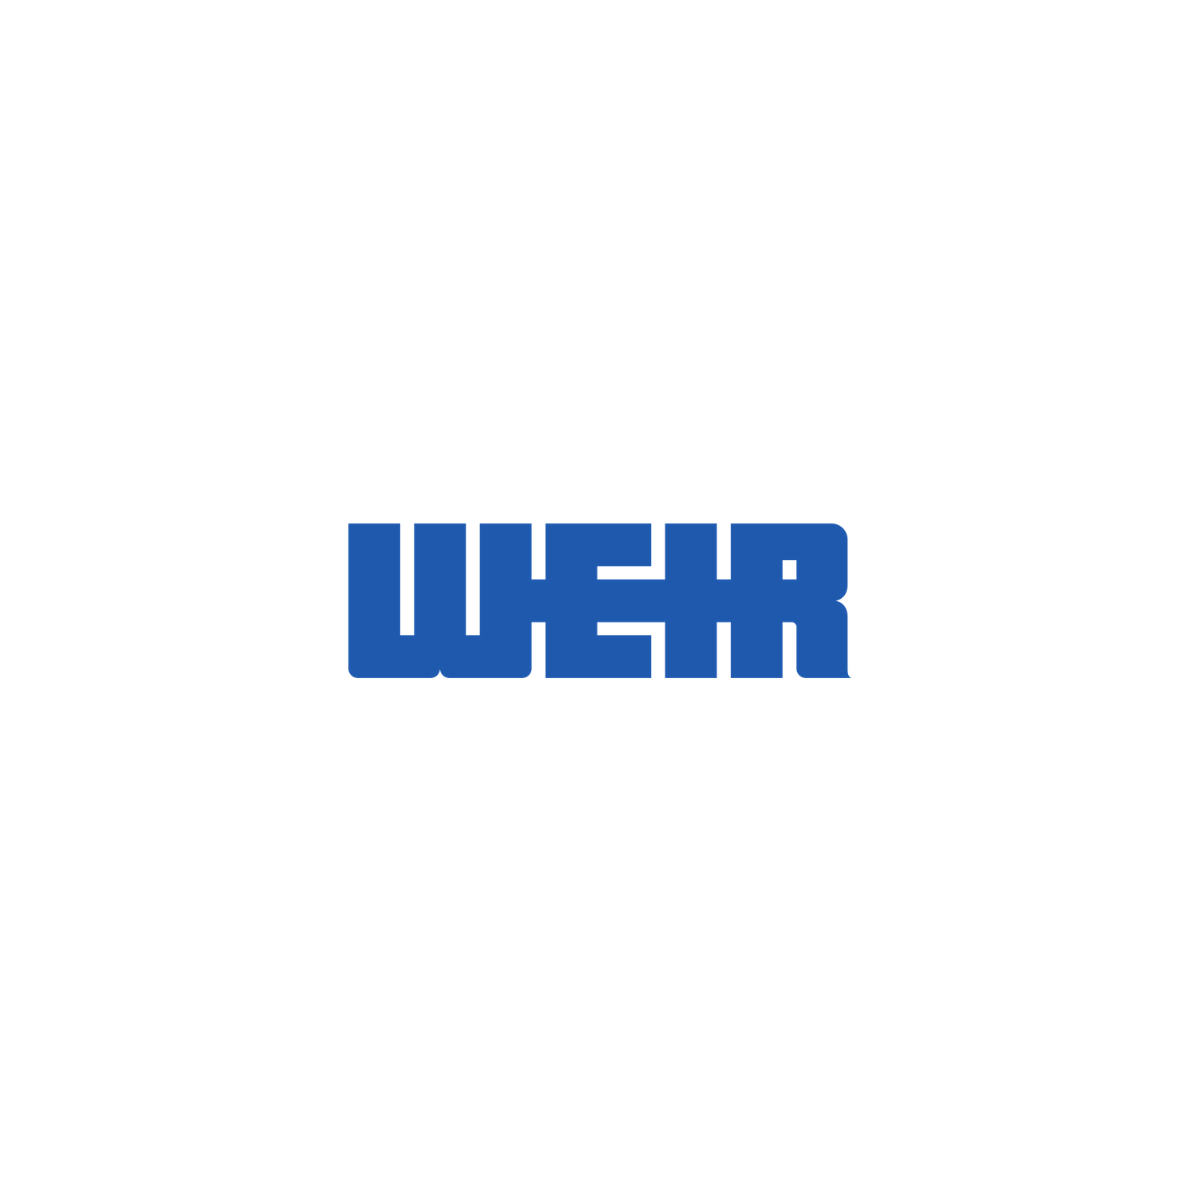 The Weir Group Plc logo